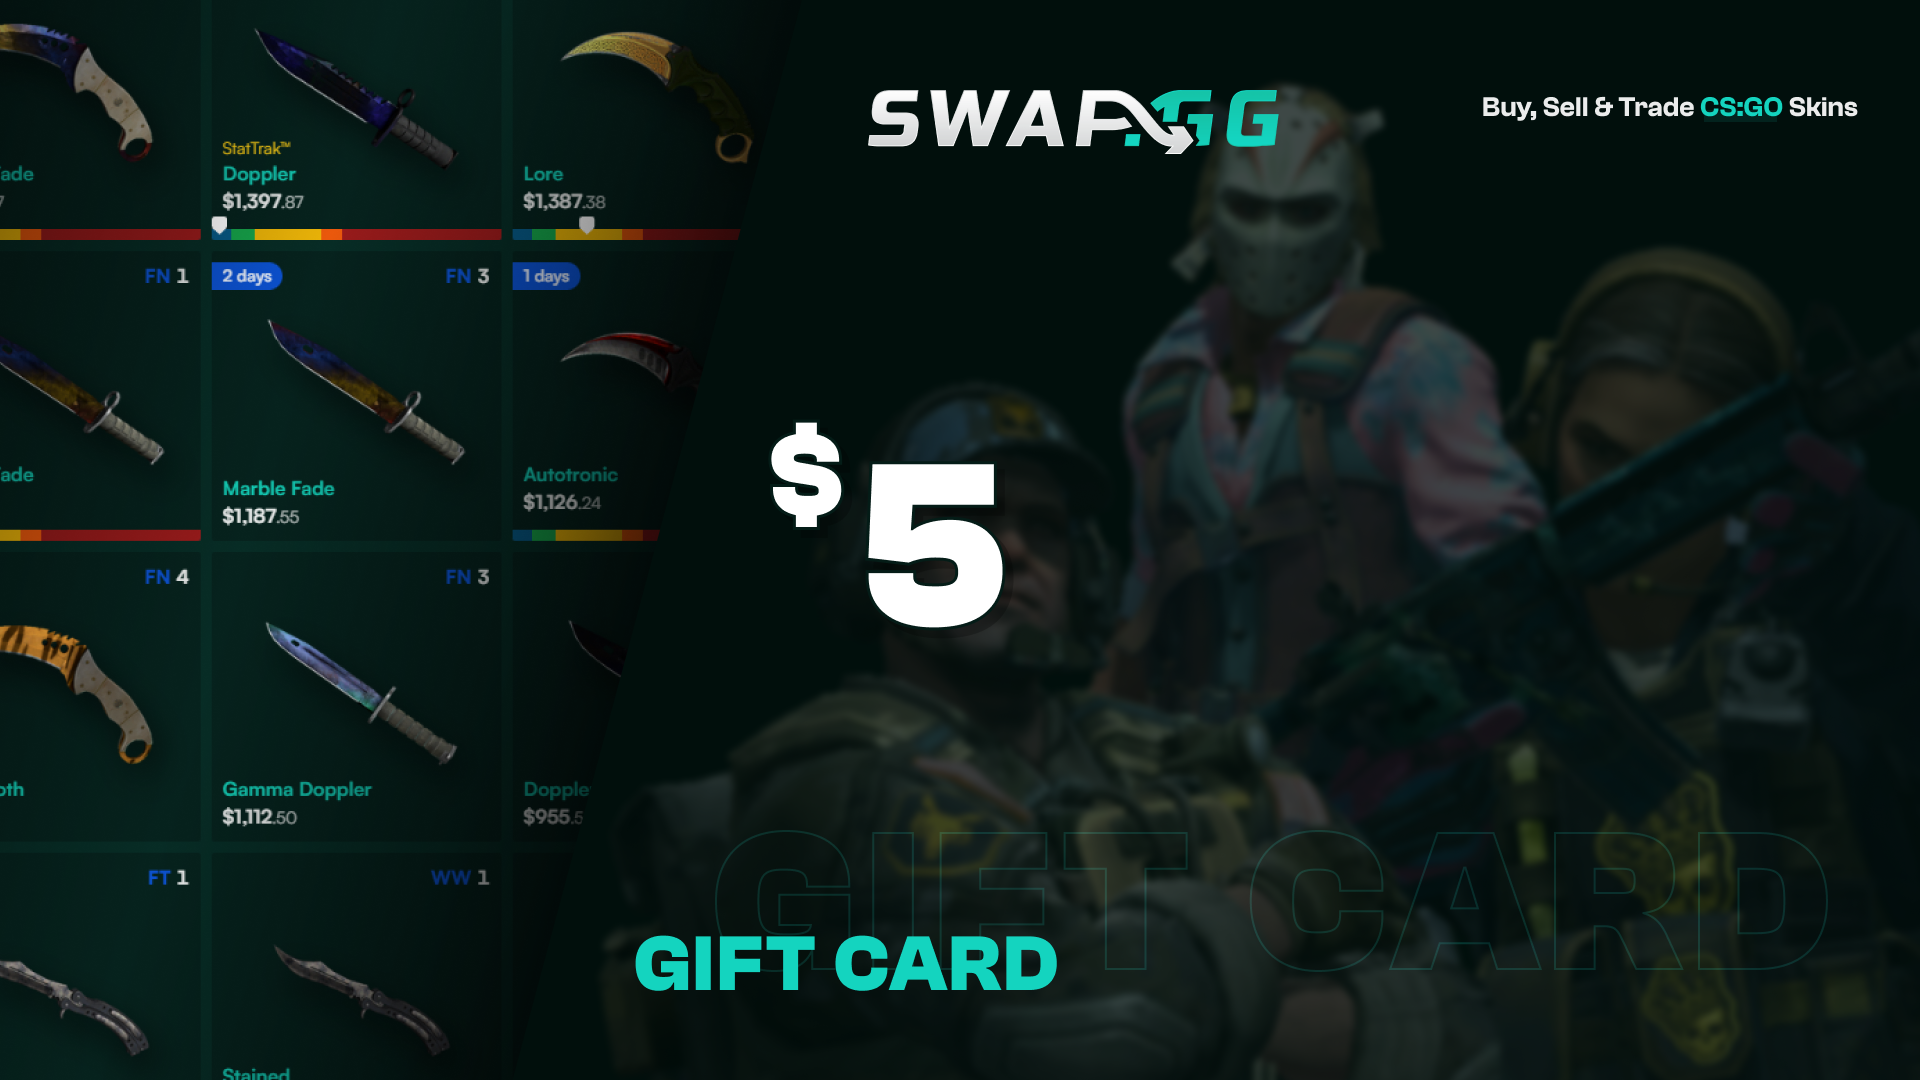 Swap.gg $5 Gift Card, $3.97